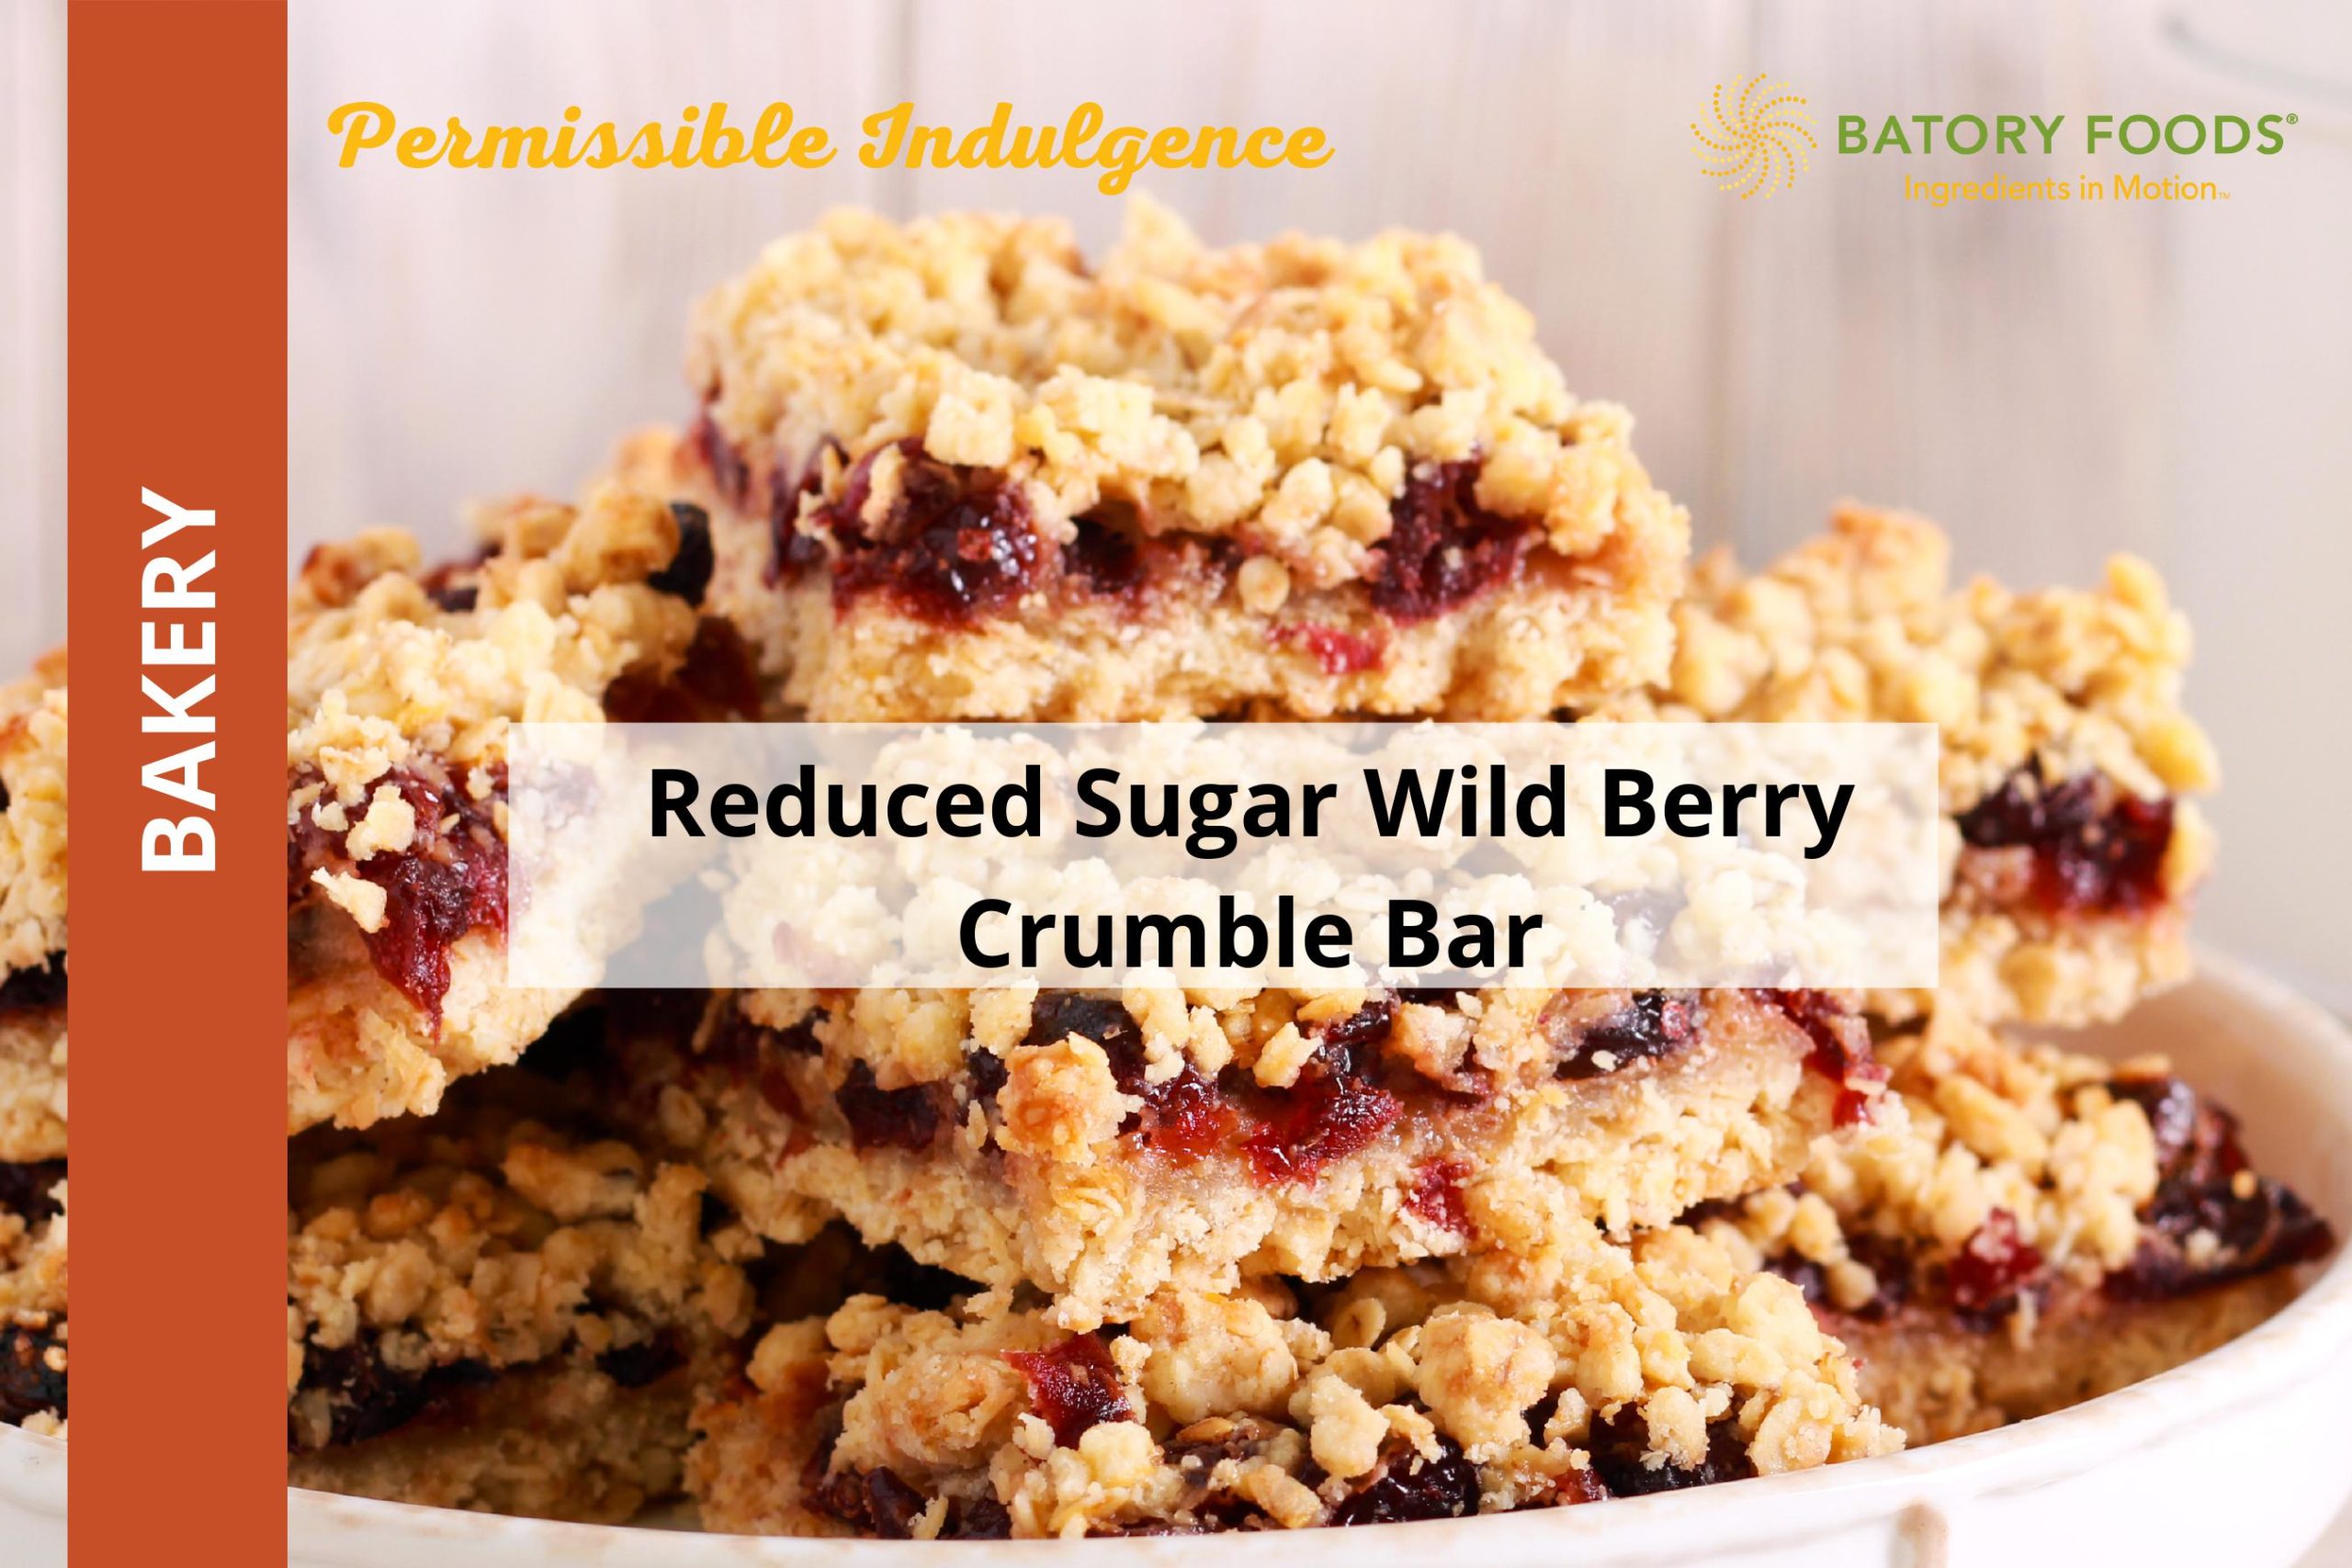 Reduced Sugar Wild Berry Crumble Bar